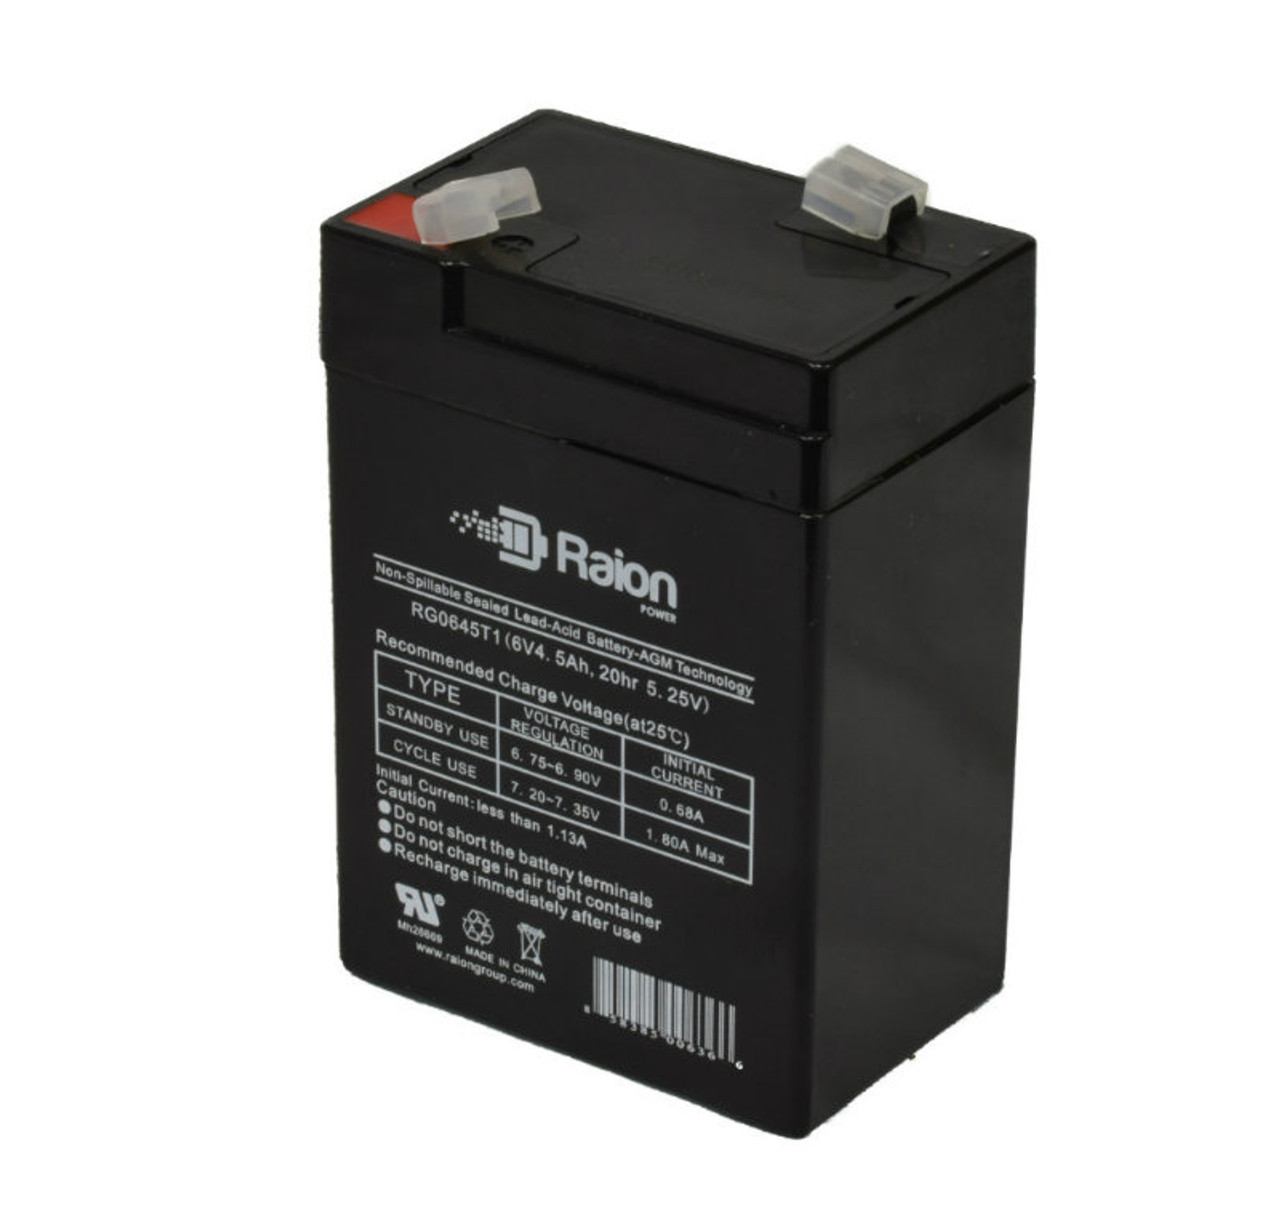 Raion Power RG0645T1 6V 4.5Ah Replacement Battery Cartridge for Sonnenschein M84001A5060042S